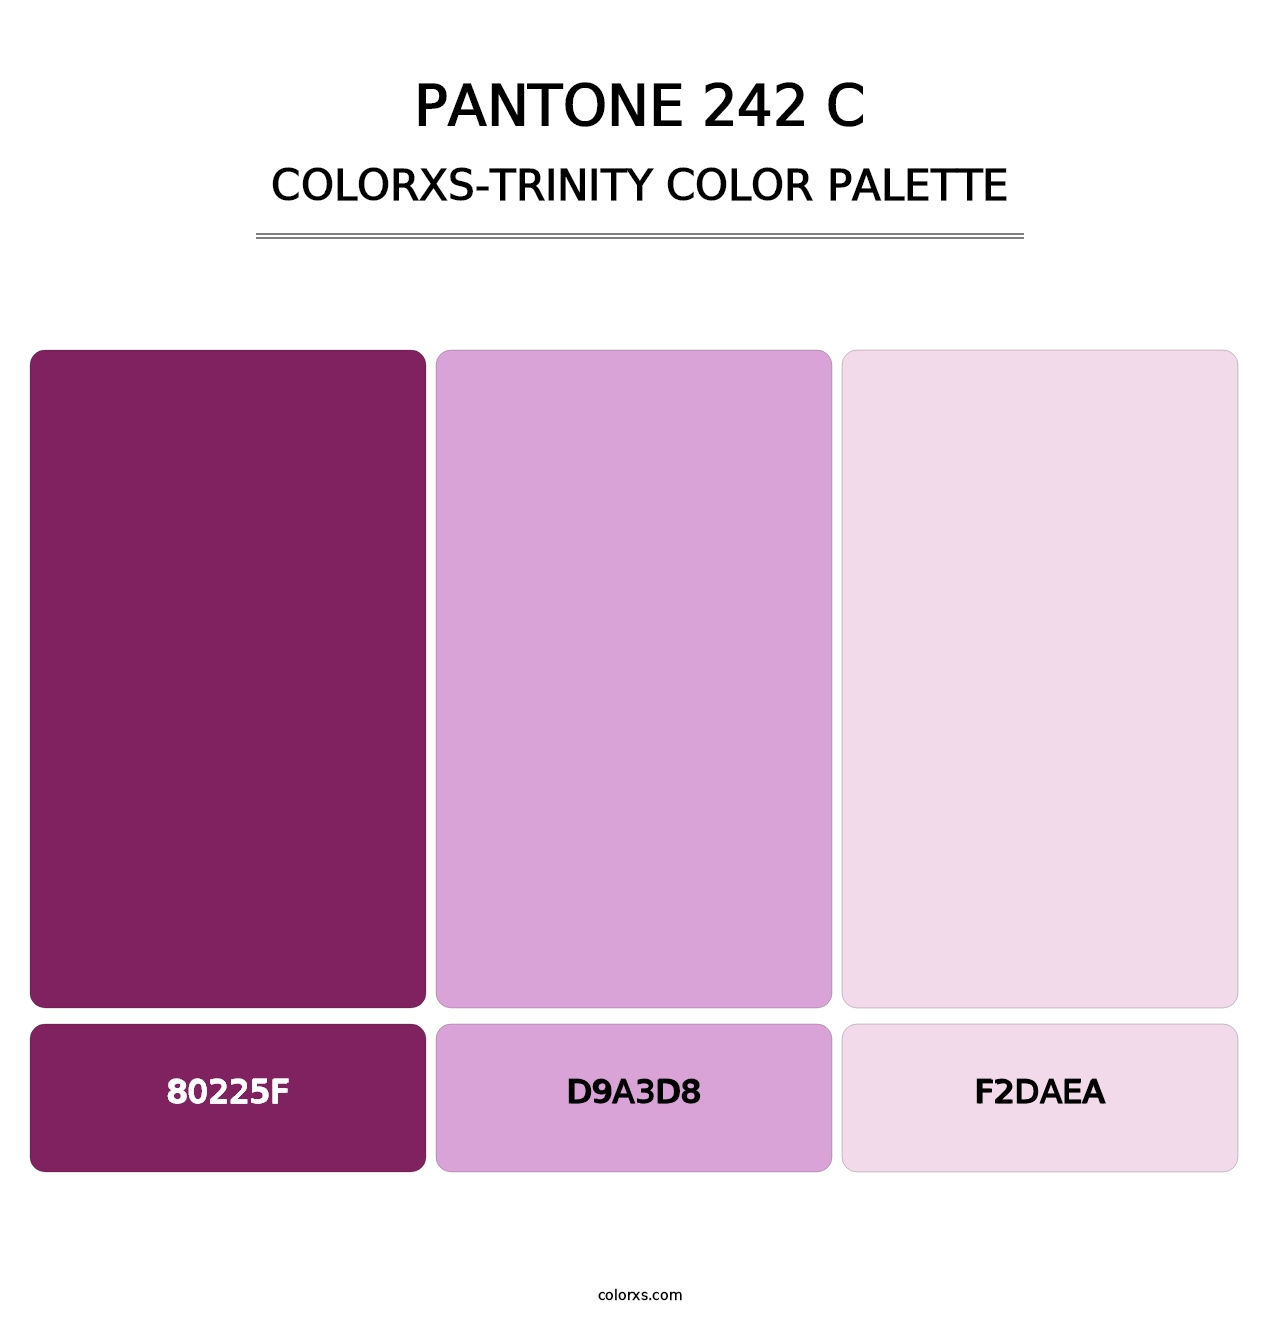 PANTONE 242 C - Colorxs Trinity Palette